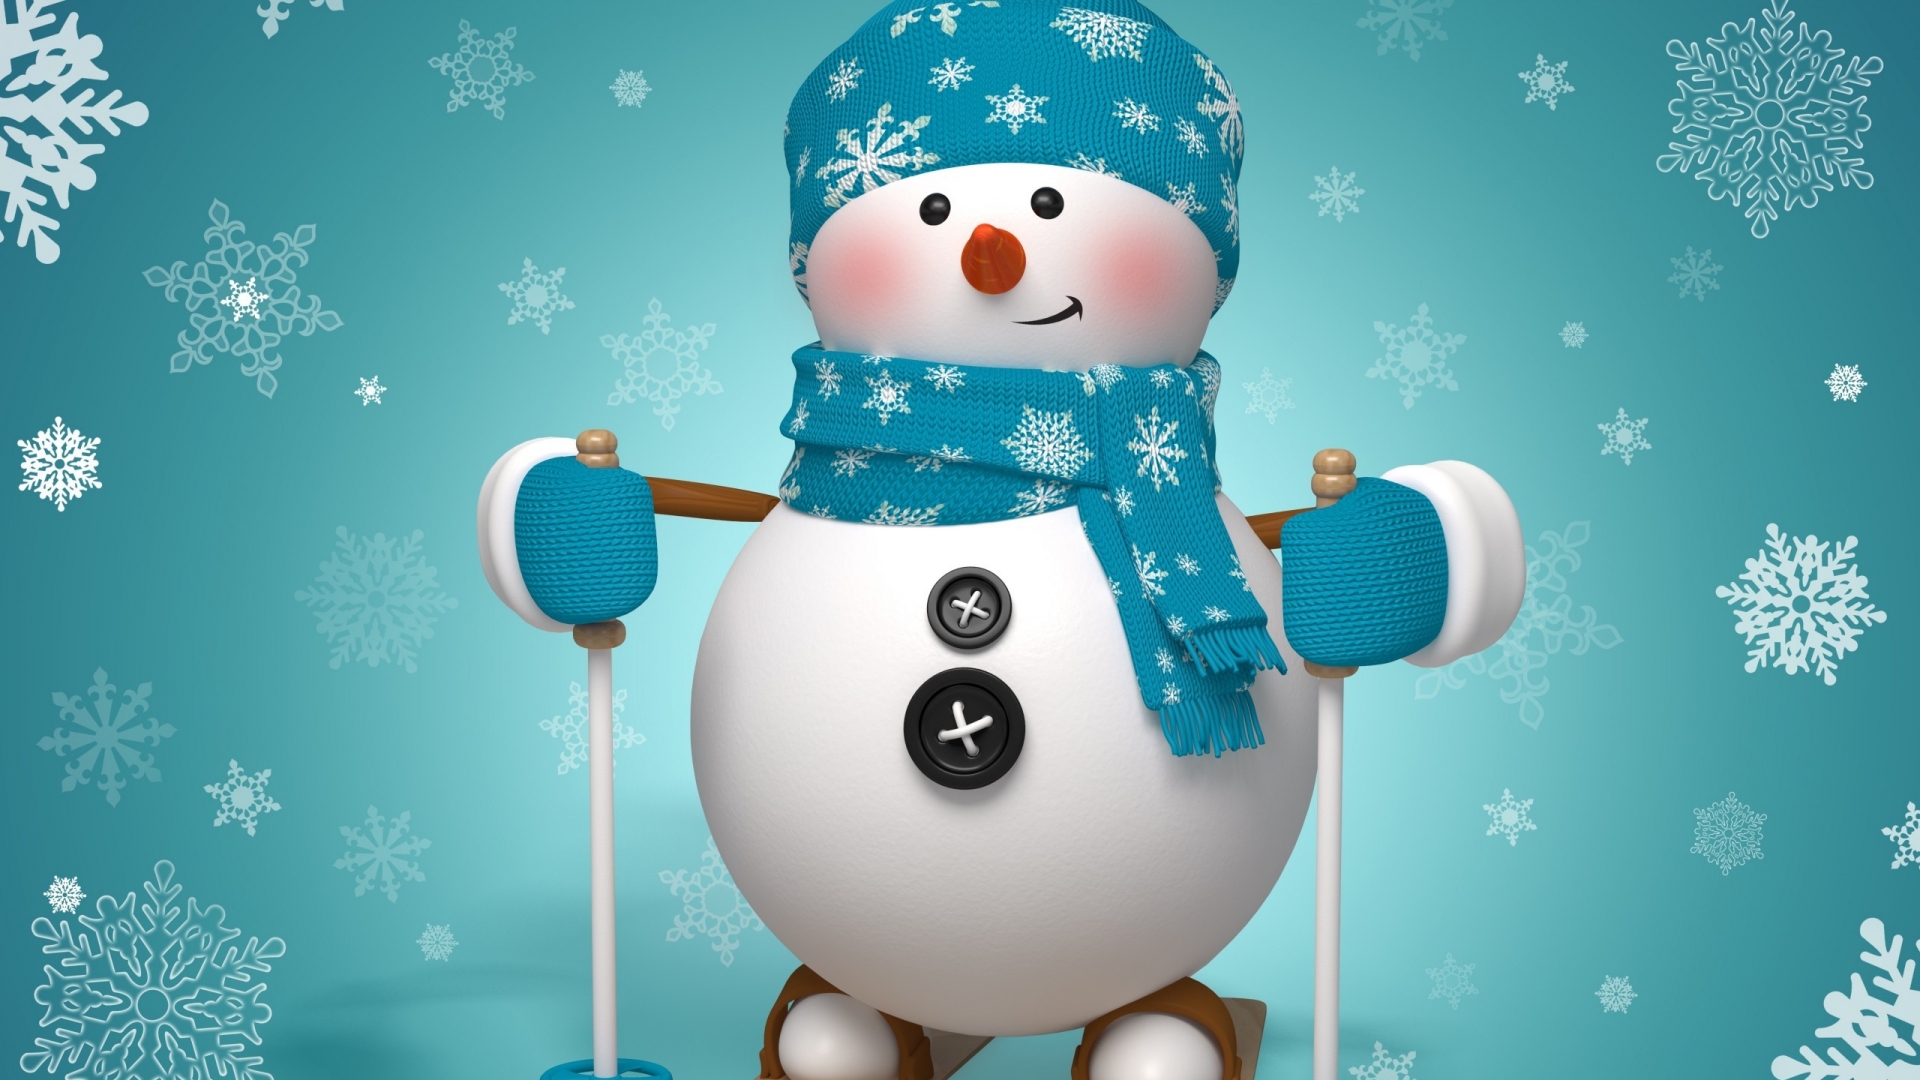 Snowman Ready to Ski for 1920 x 1080 HDTV 1080p resolution